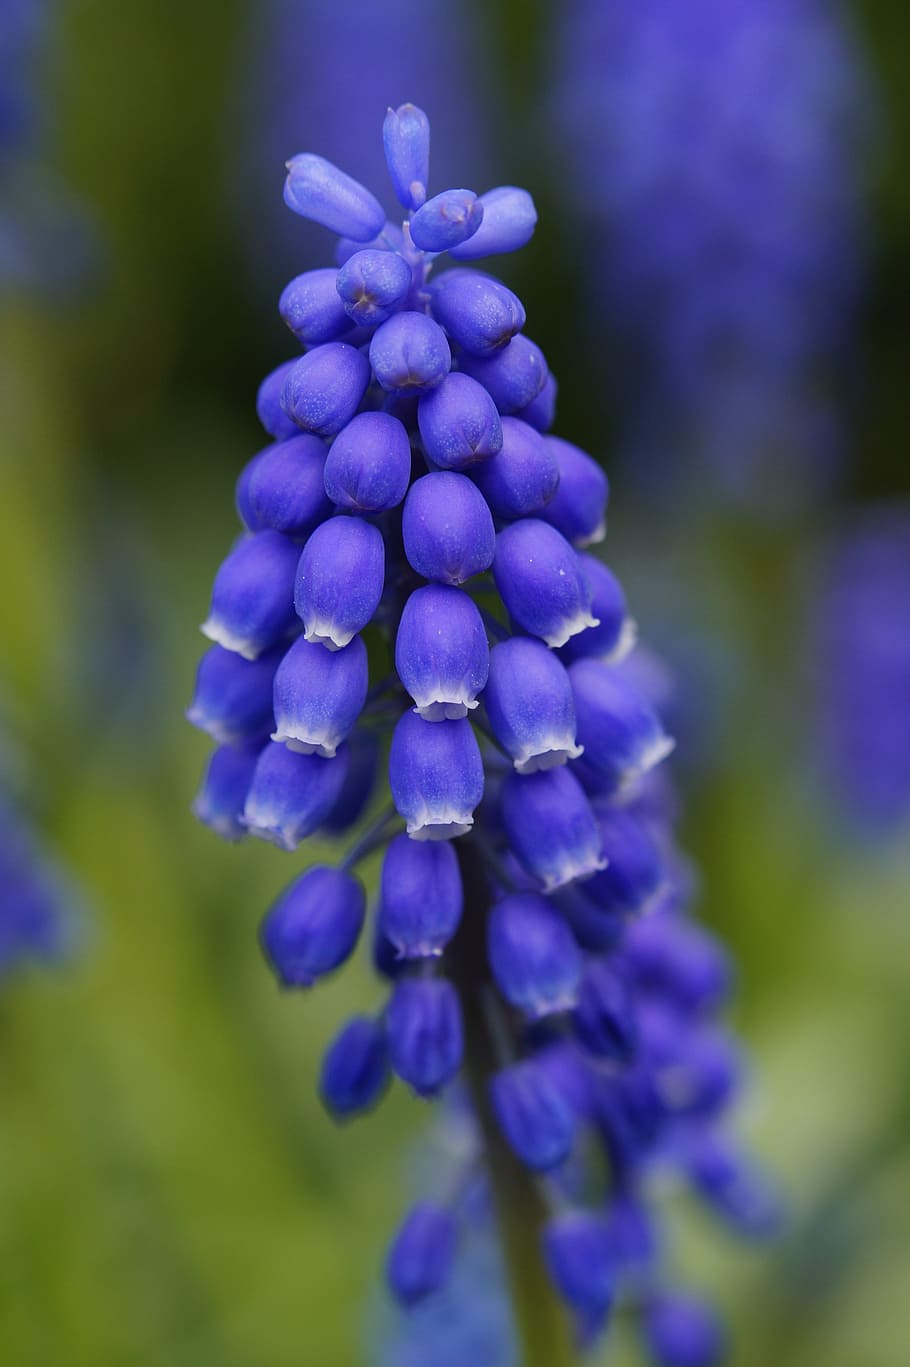 hyacinth, blossom, bloom, flower, blue, traubenförmige inflorescences, inflorescences, spring, garden, early bloomer